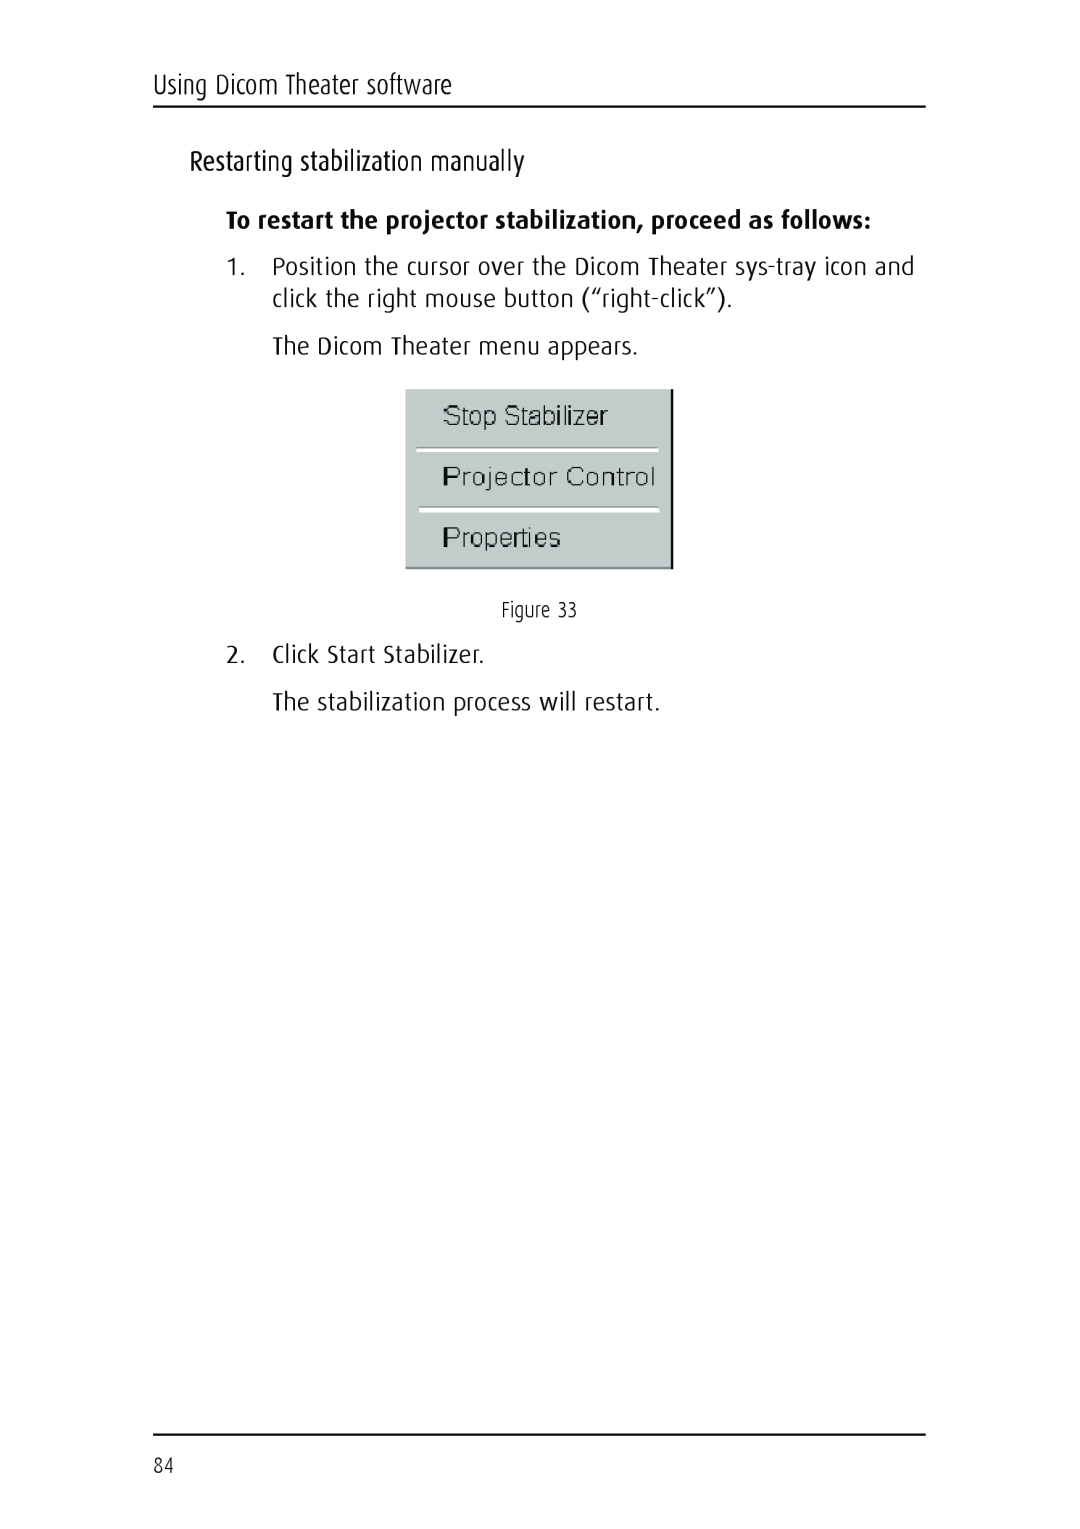 Barco MGP 15 user manual Restarting stabilization manually, Using Dicom Theater software, The Dicom Theater menu appears 